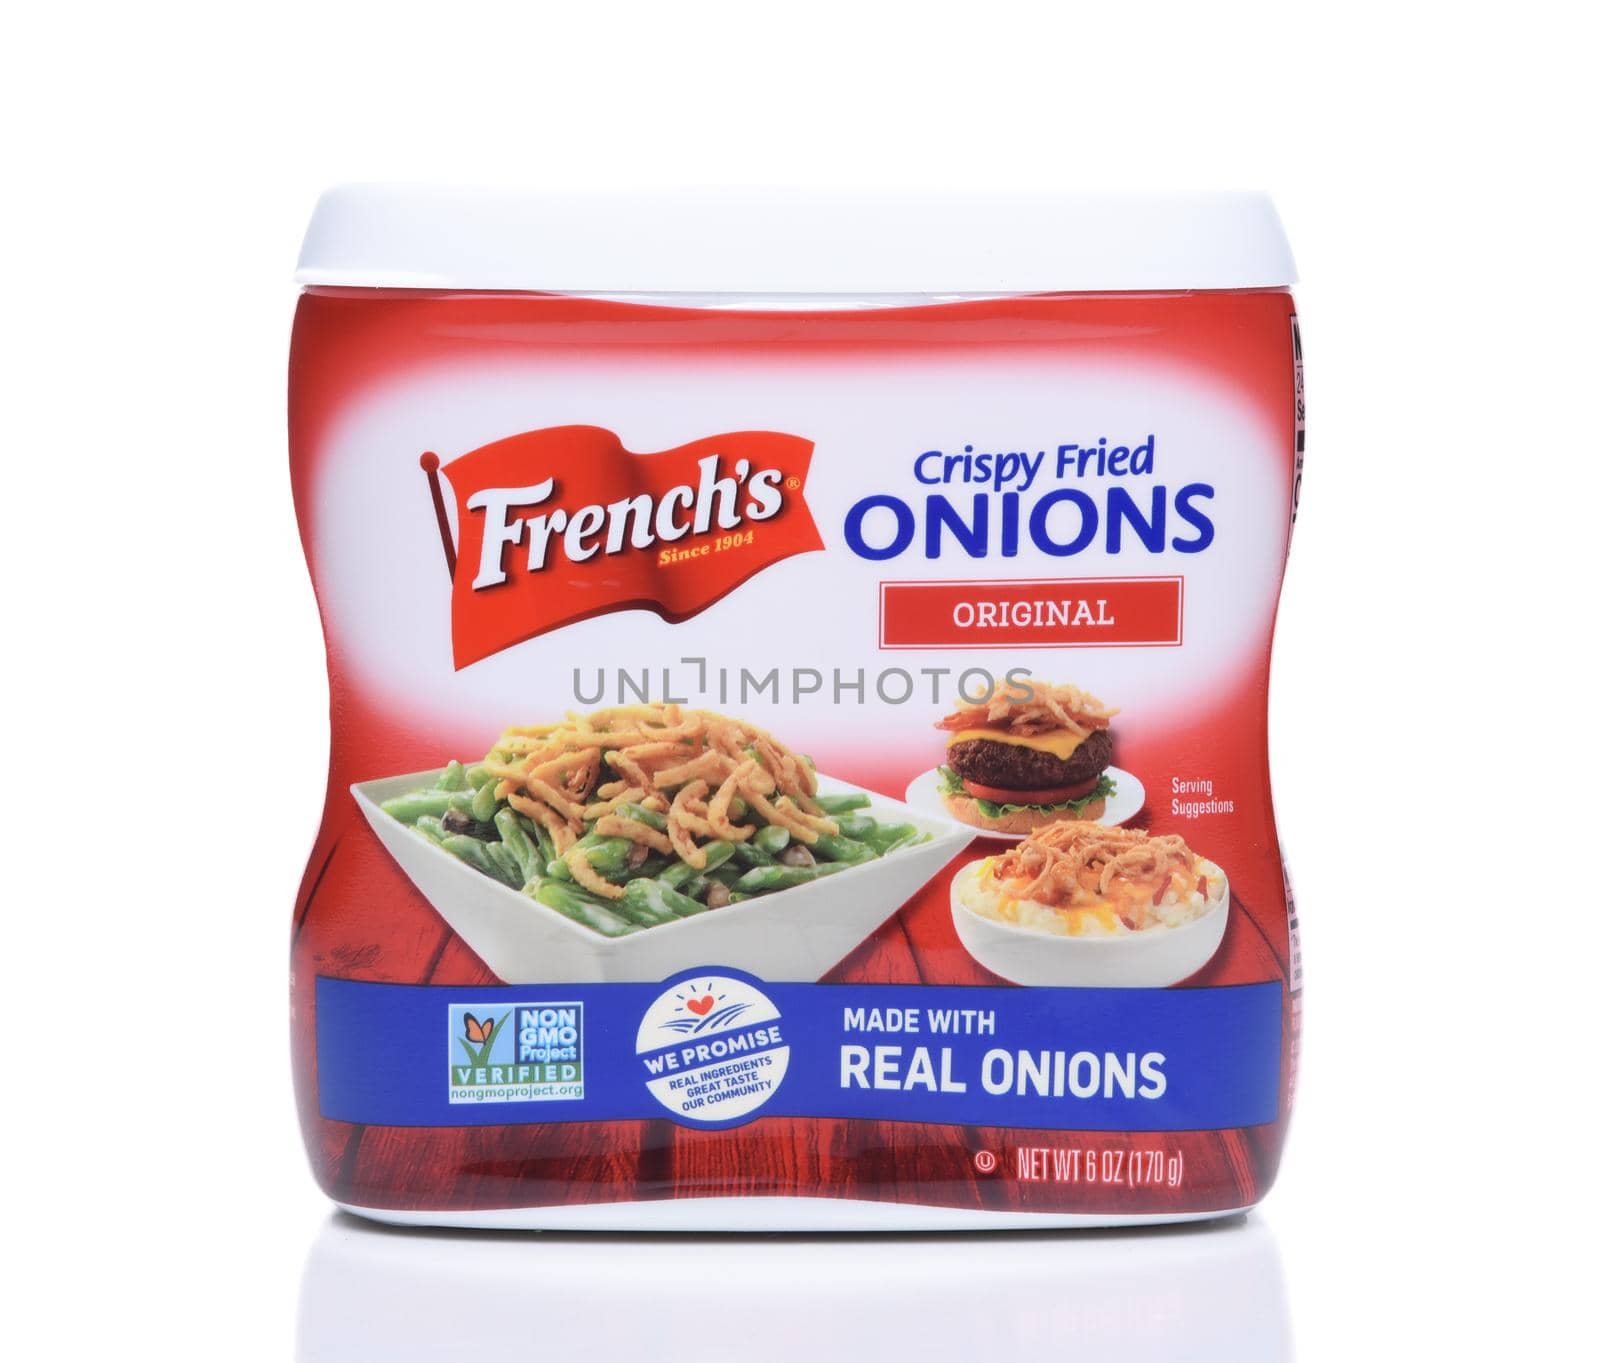 Frenchs Crispy Fried Onions by sCukrov